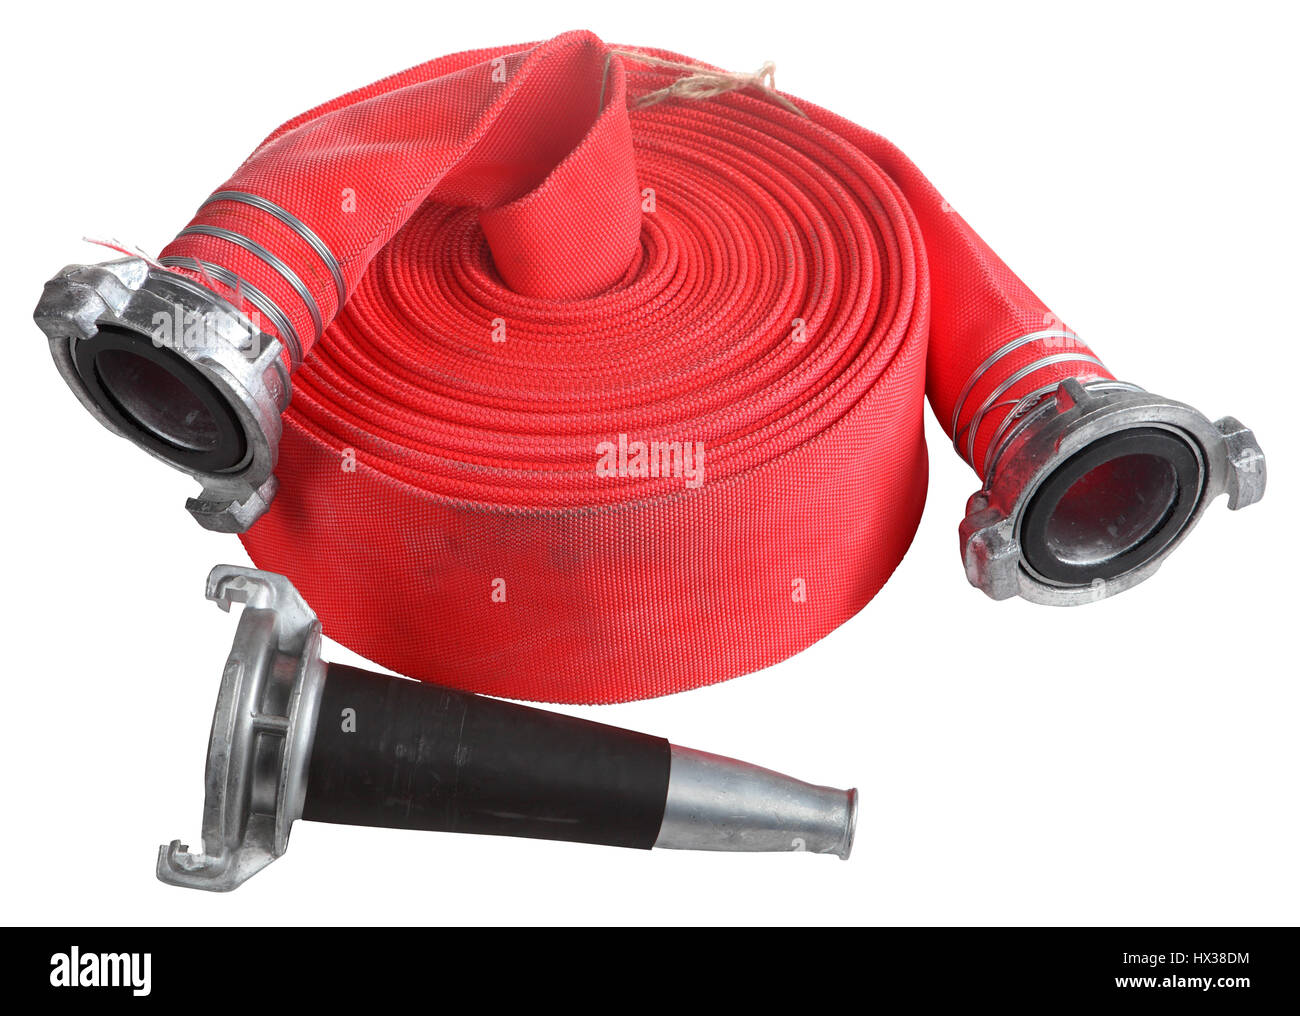 Fire Fighter Industry, Red Fire hose winder roll reels, fire